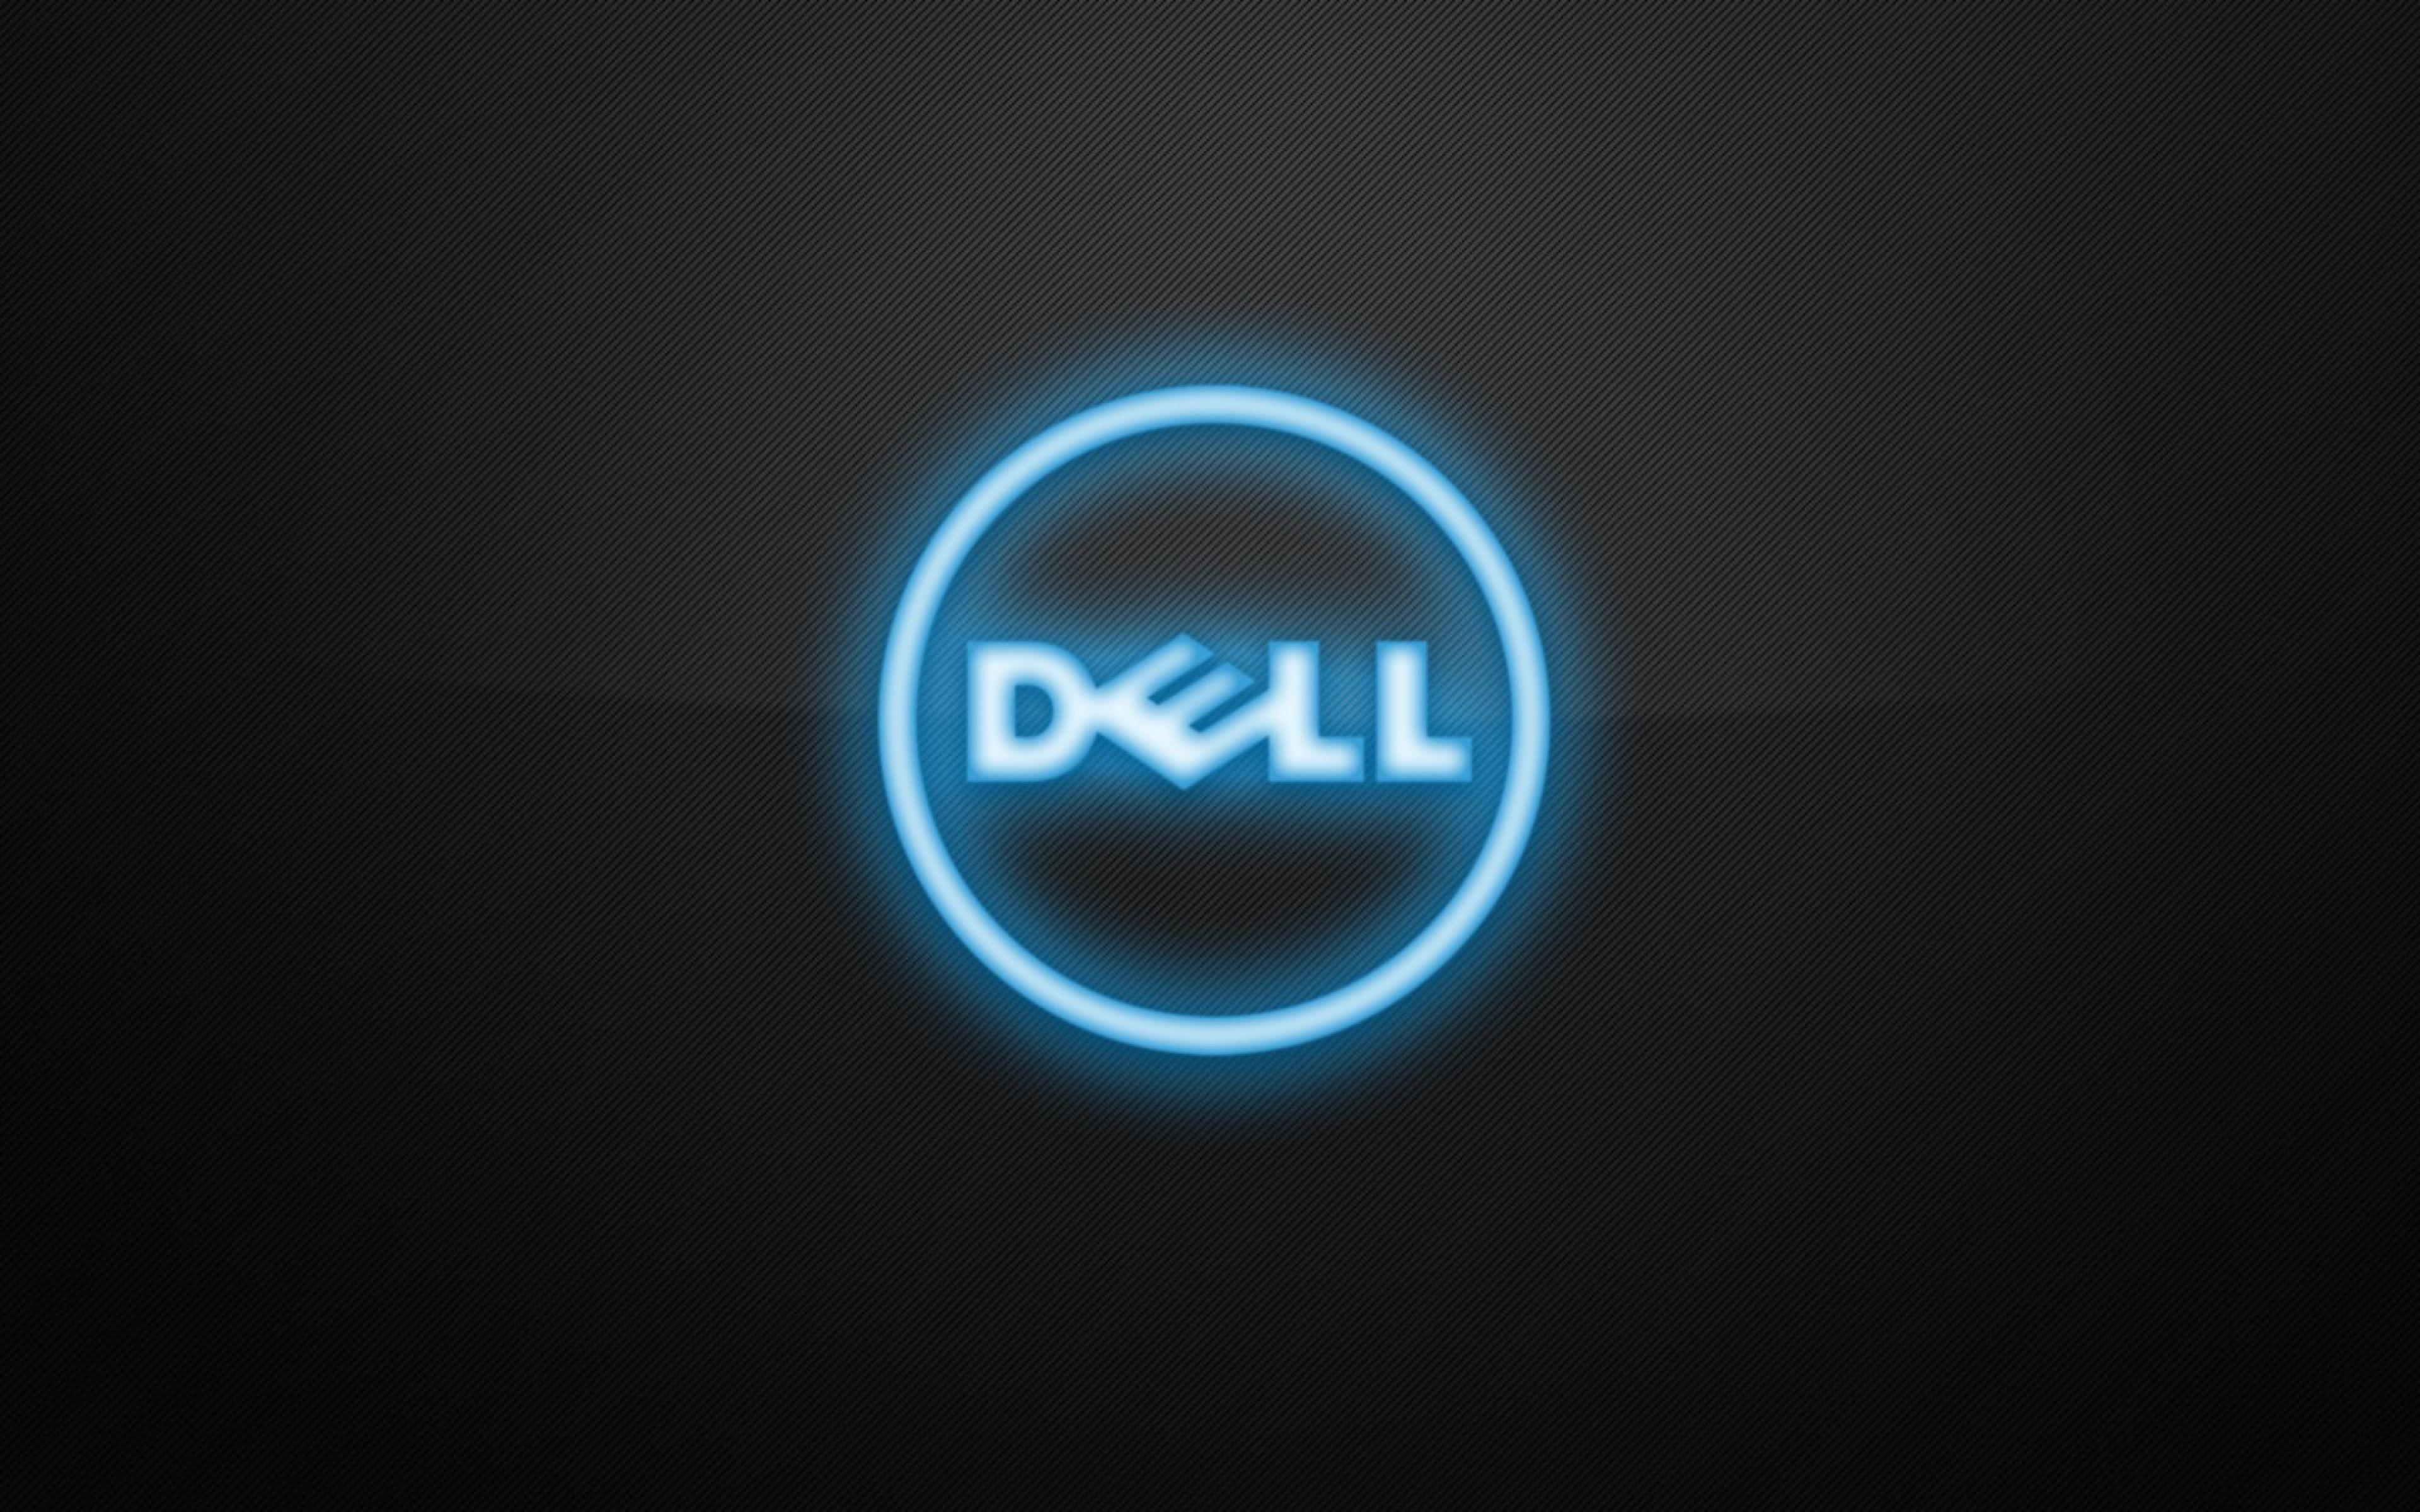 Dell Logo Wallpapers - Wallpaper Cave